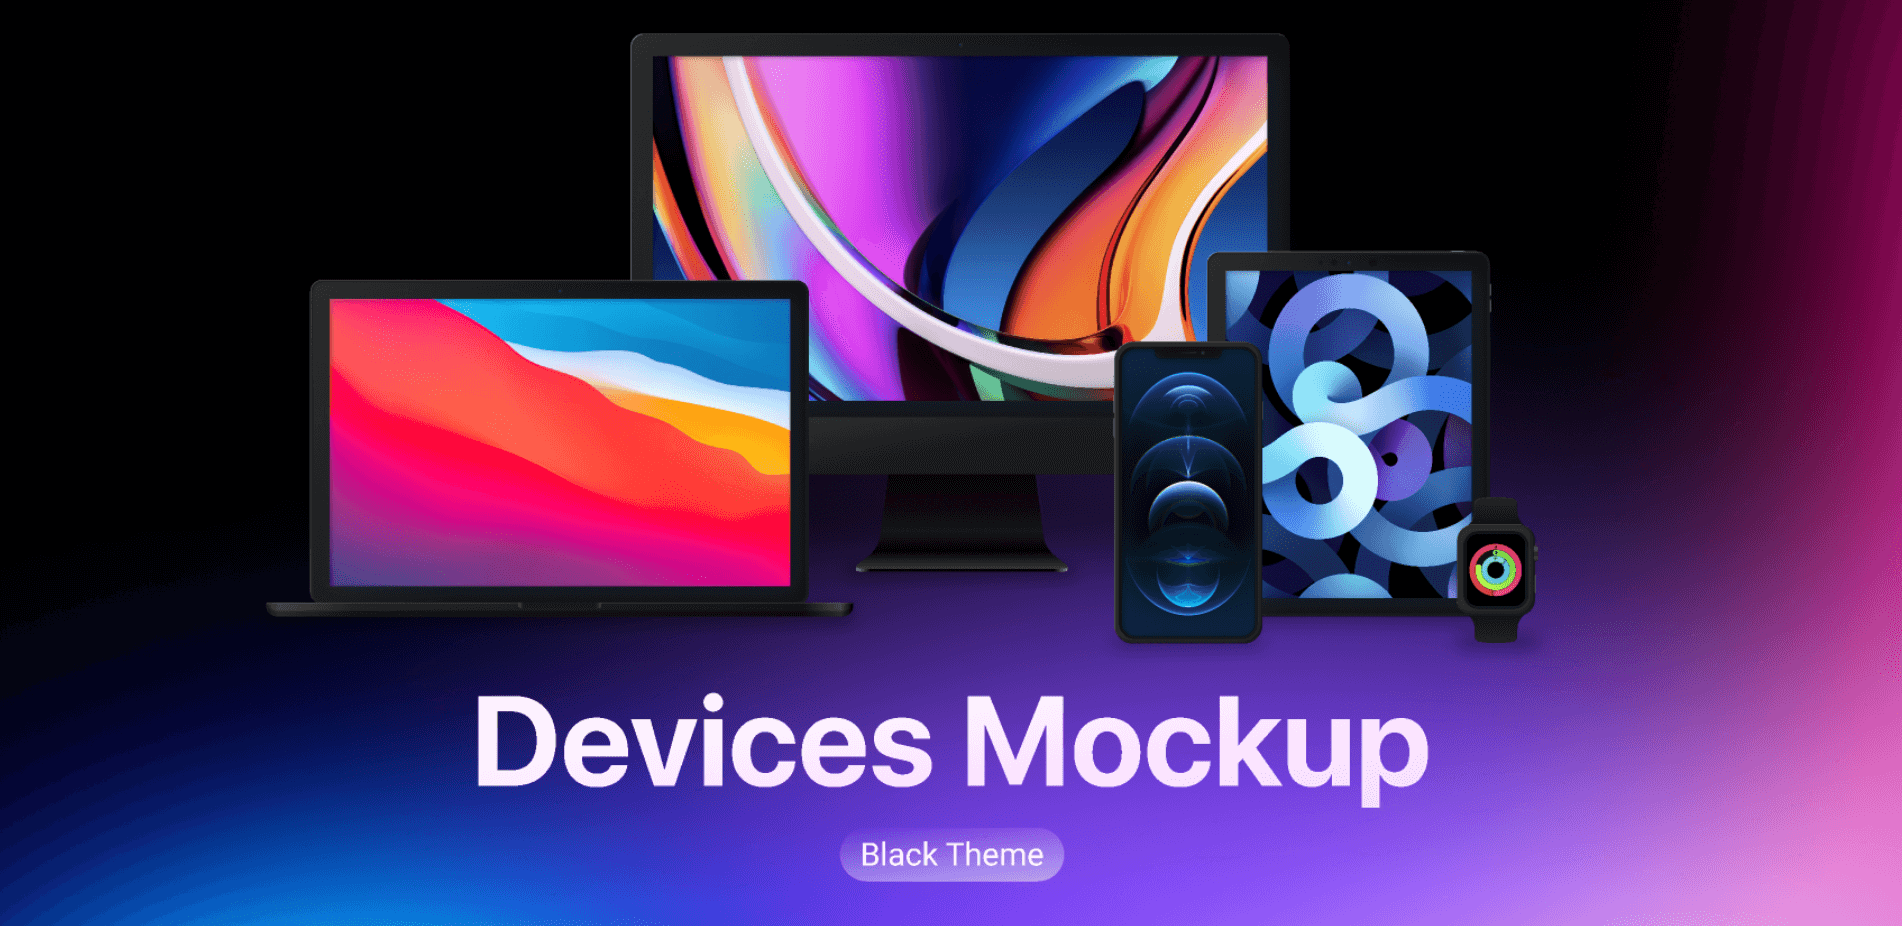 Apple Device Mockup (Black)